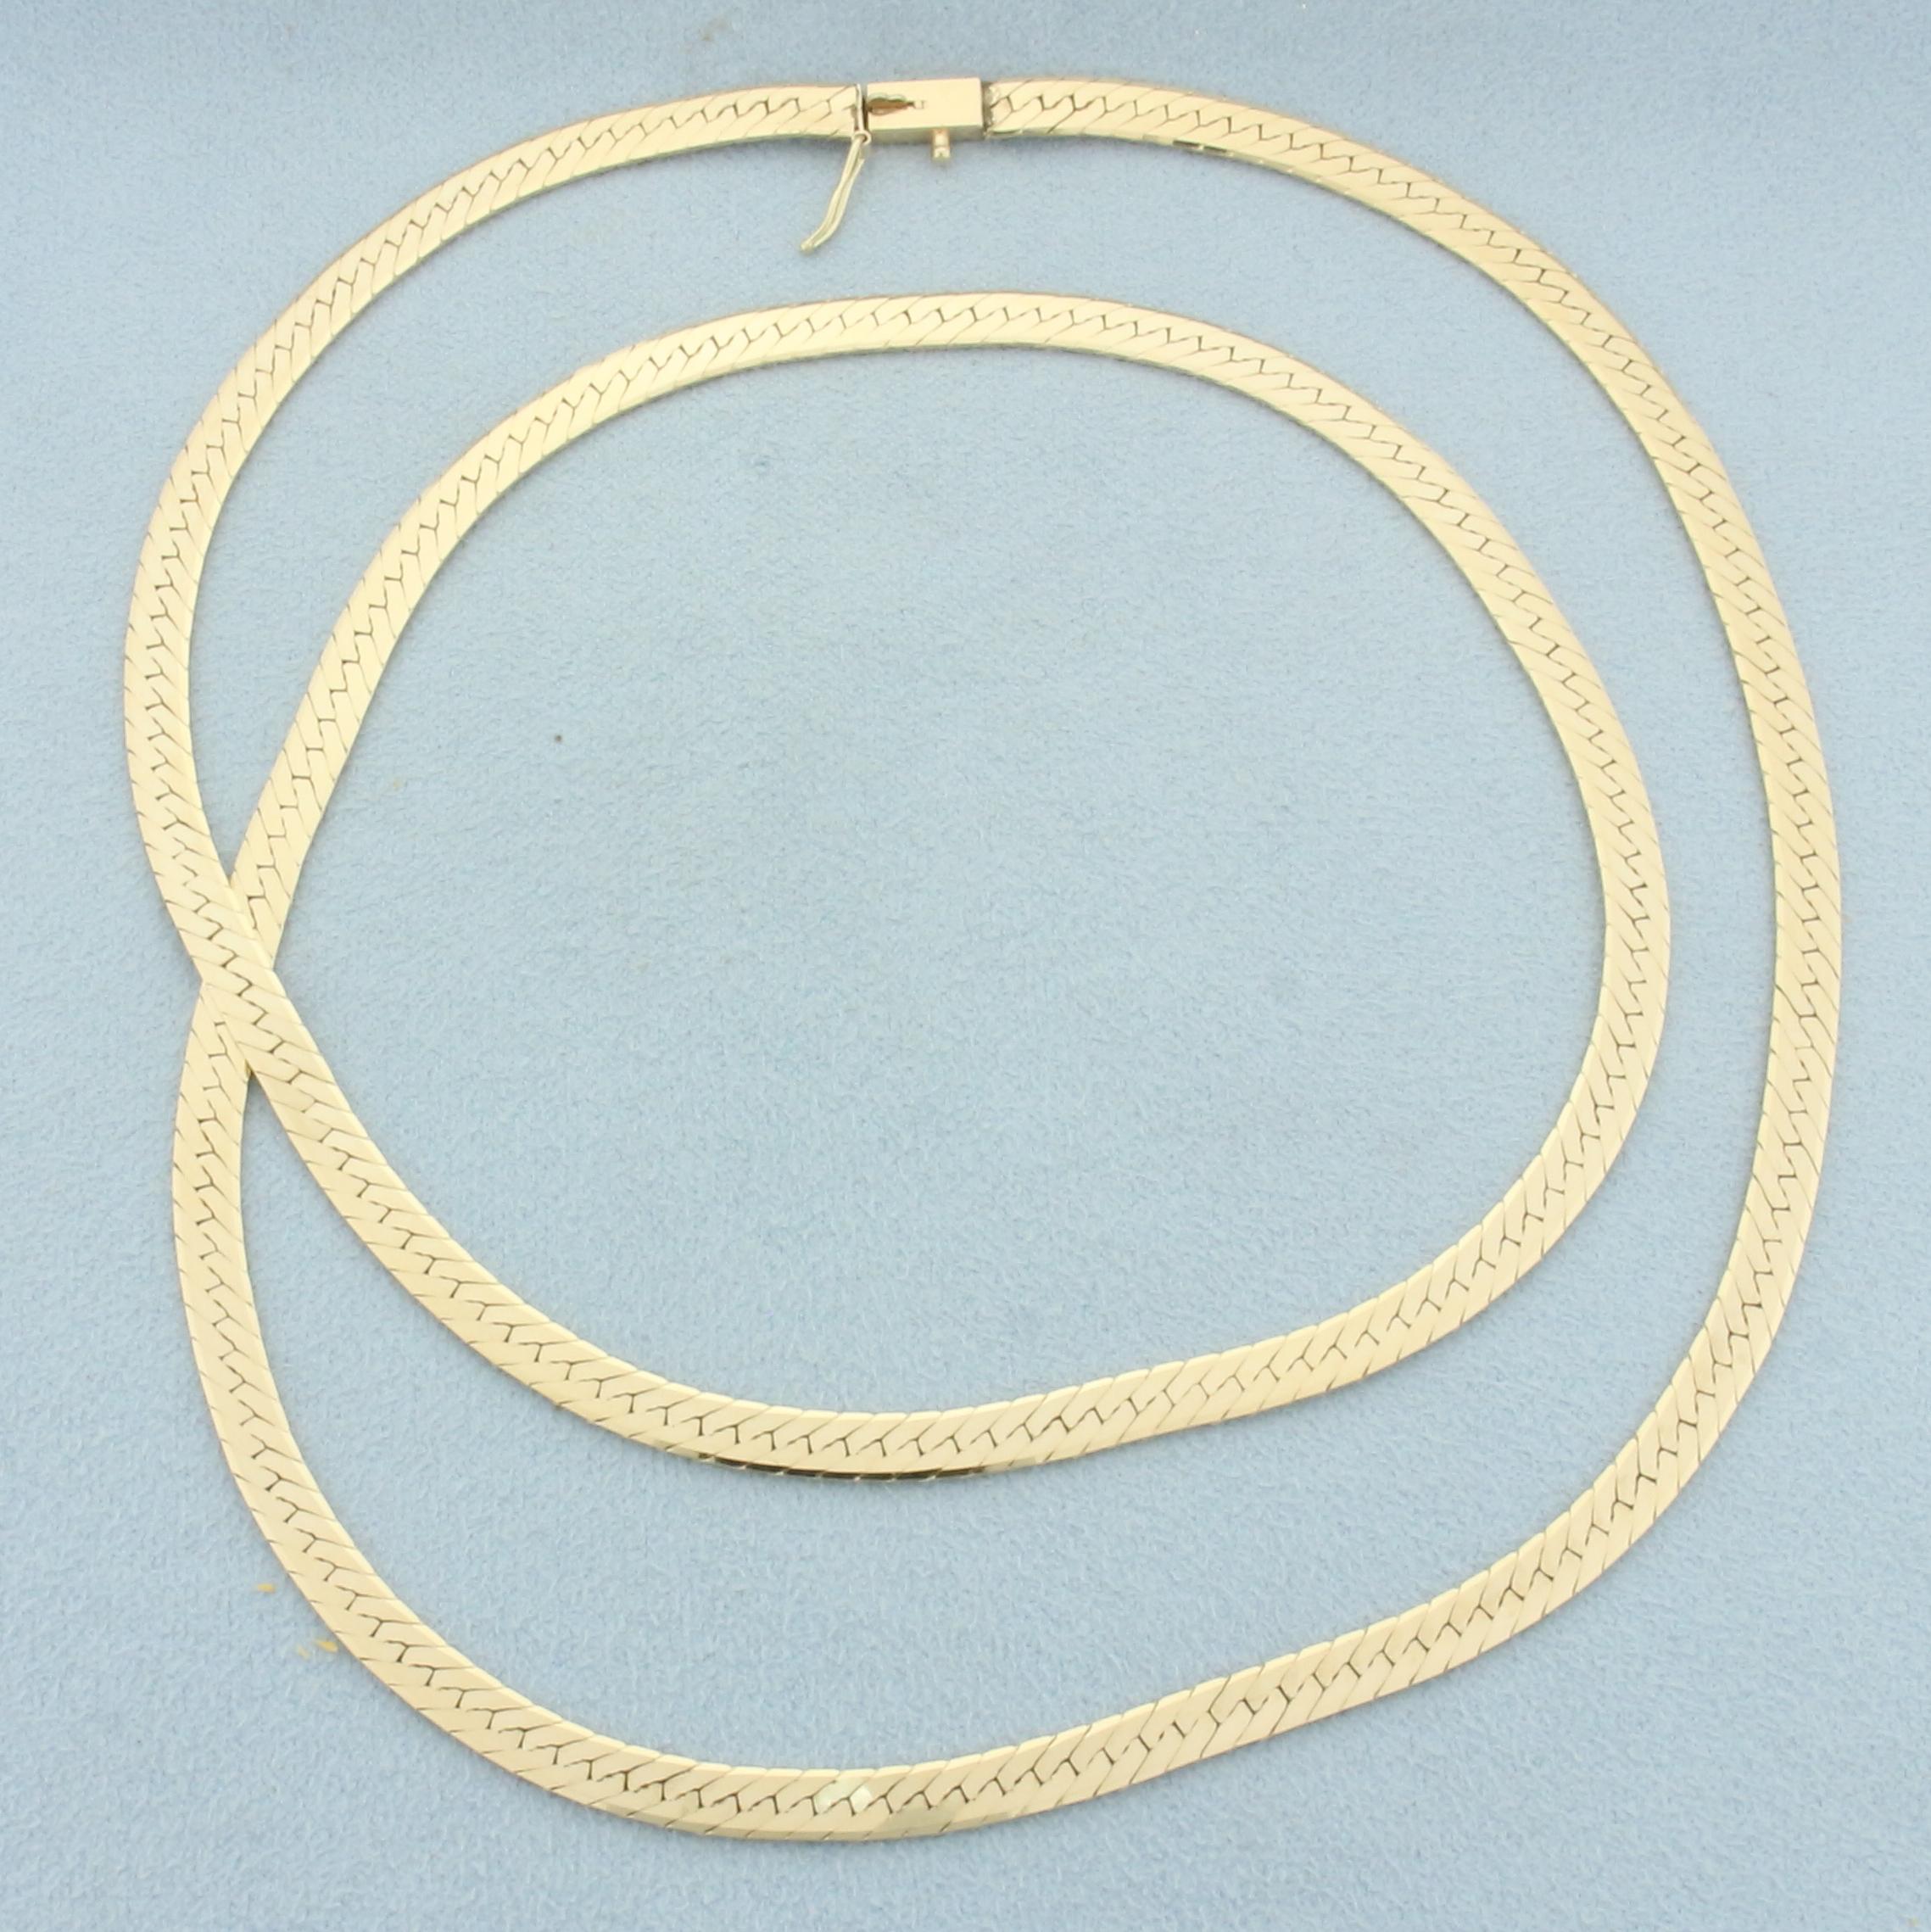 24 Inch Herringbone Chain Necklace In 14k Yellow Gold